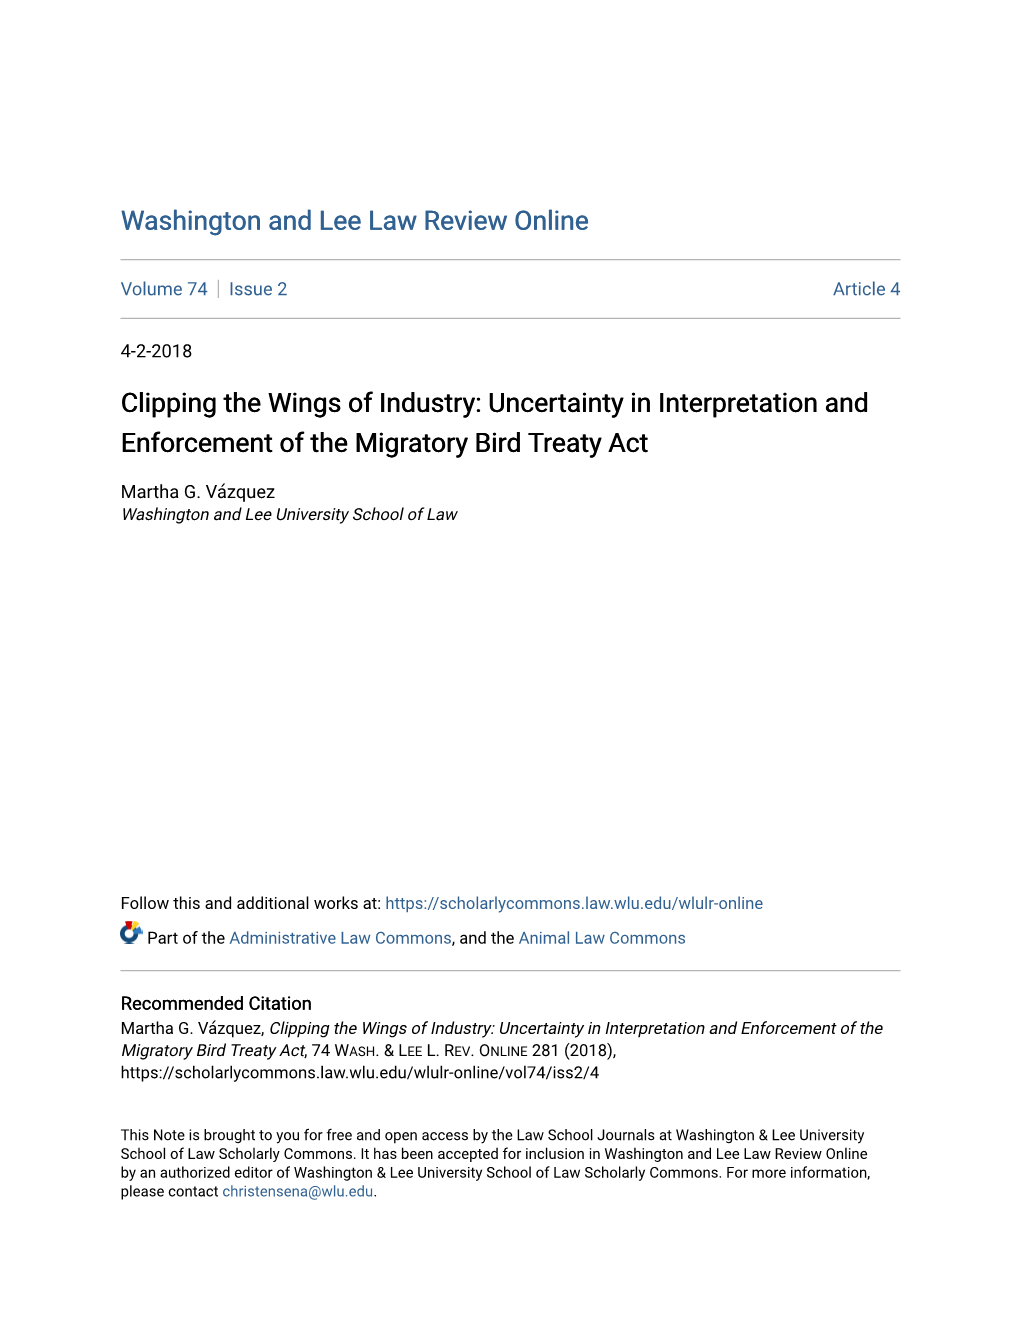 Uncertainty in Interpretation and Enforcement of the Migratory Bird Treaty Act